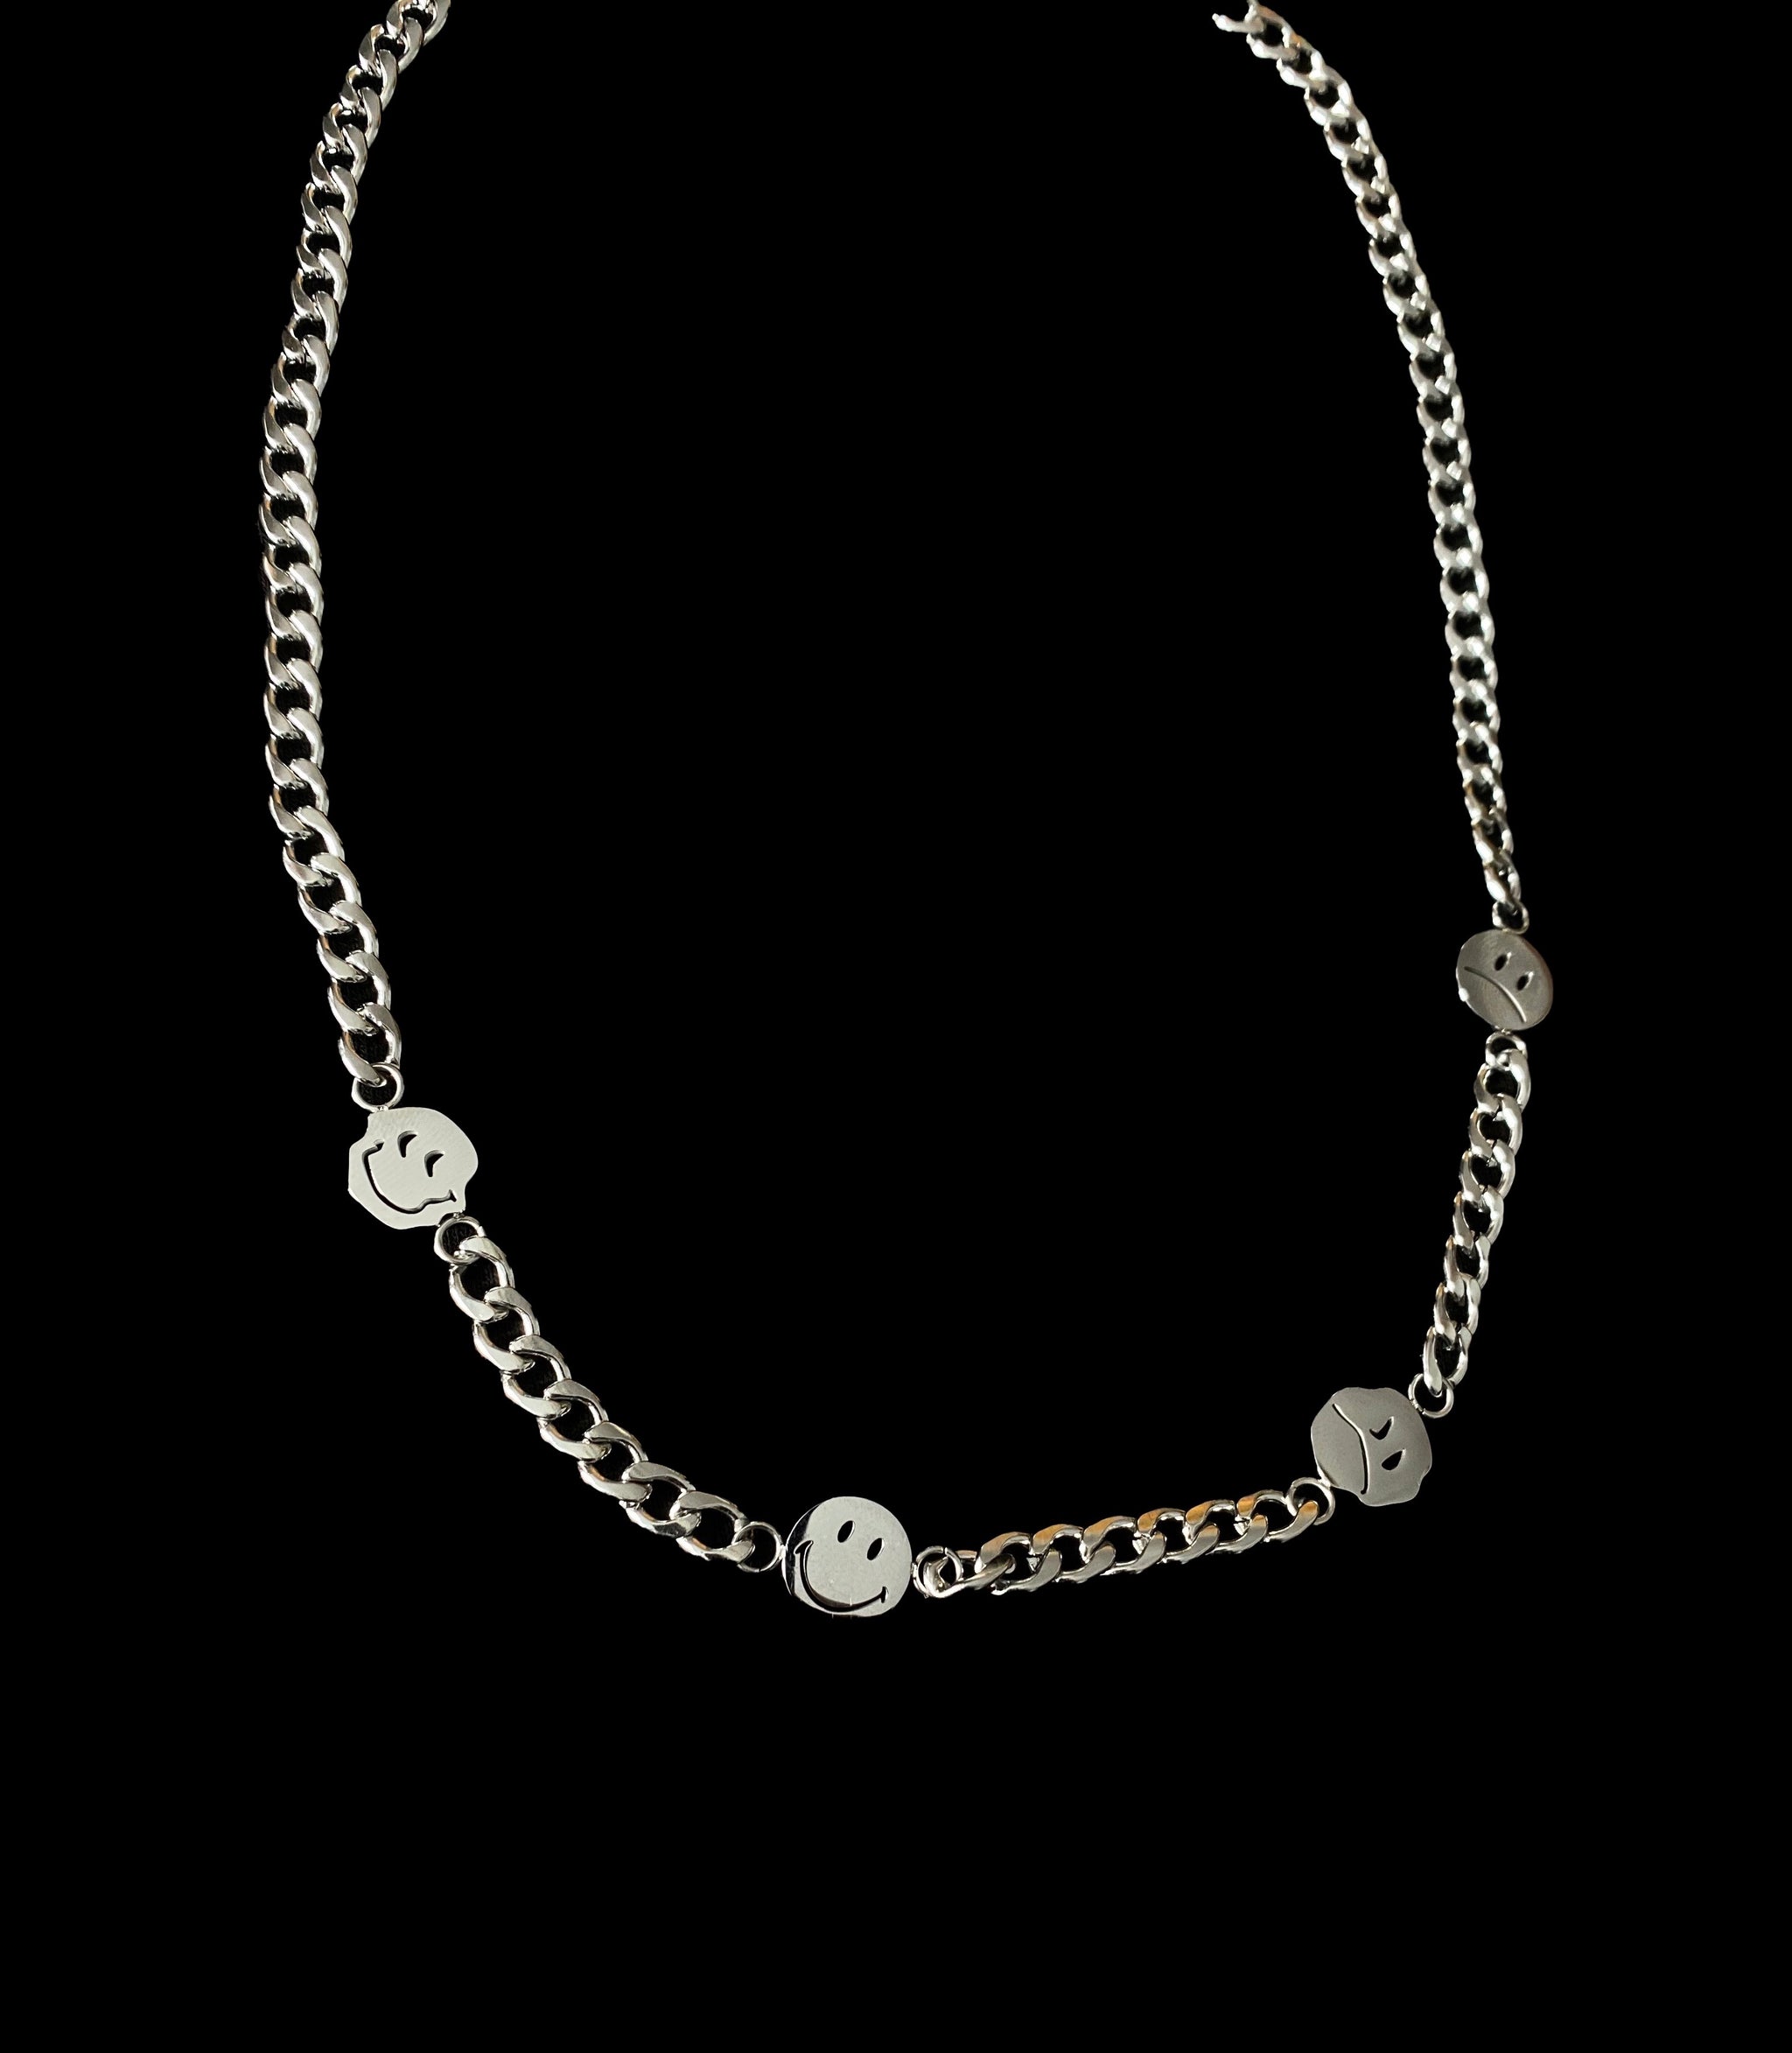 Silver Mood Necklace - Fashion Jewelry by Yordy.